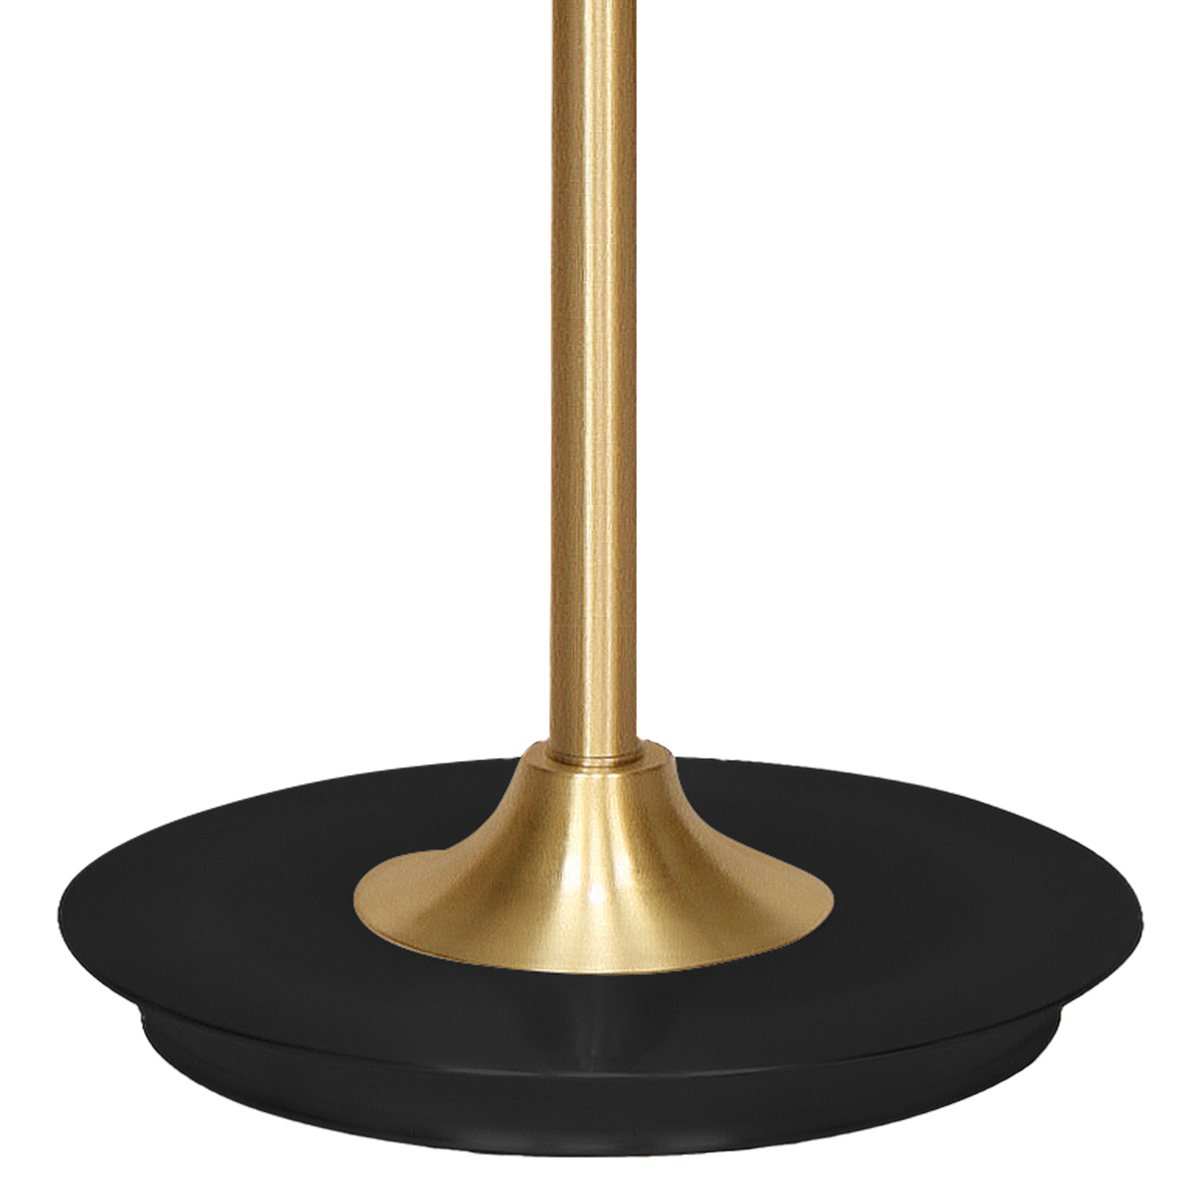 Sarantino Metal Floor Lamp Brushed Brass Finish with White Shade